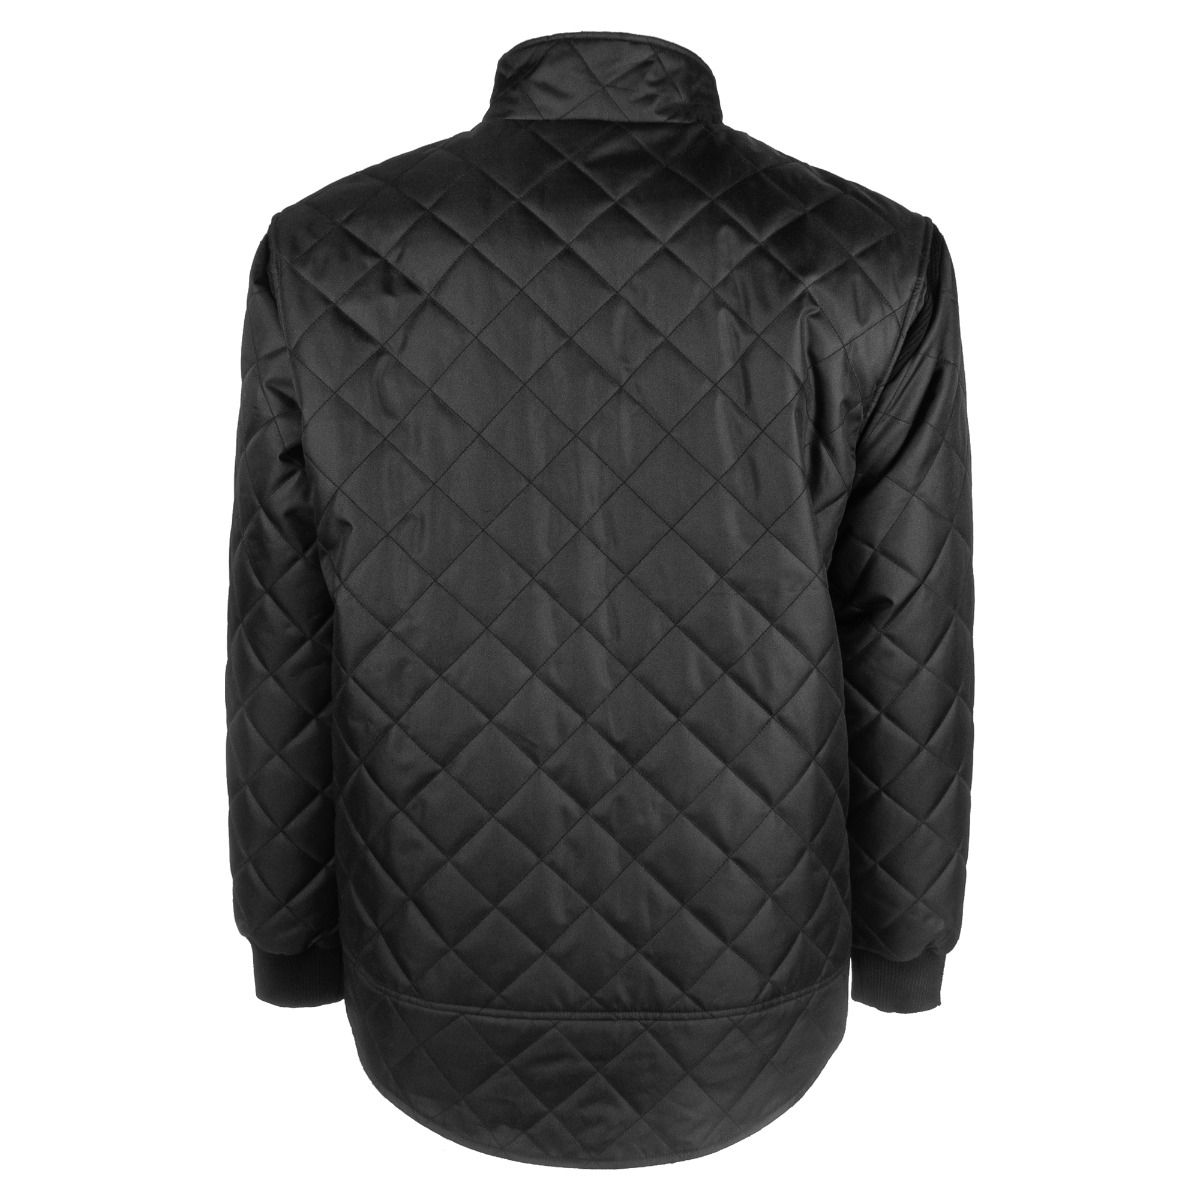 Terra Ice Men's Black Diamond Quilted Freezer Jacket | S-3XL